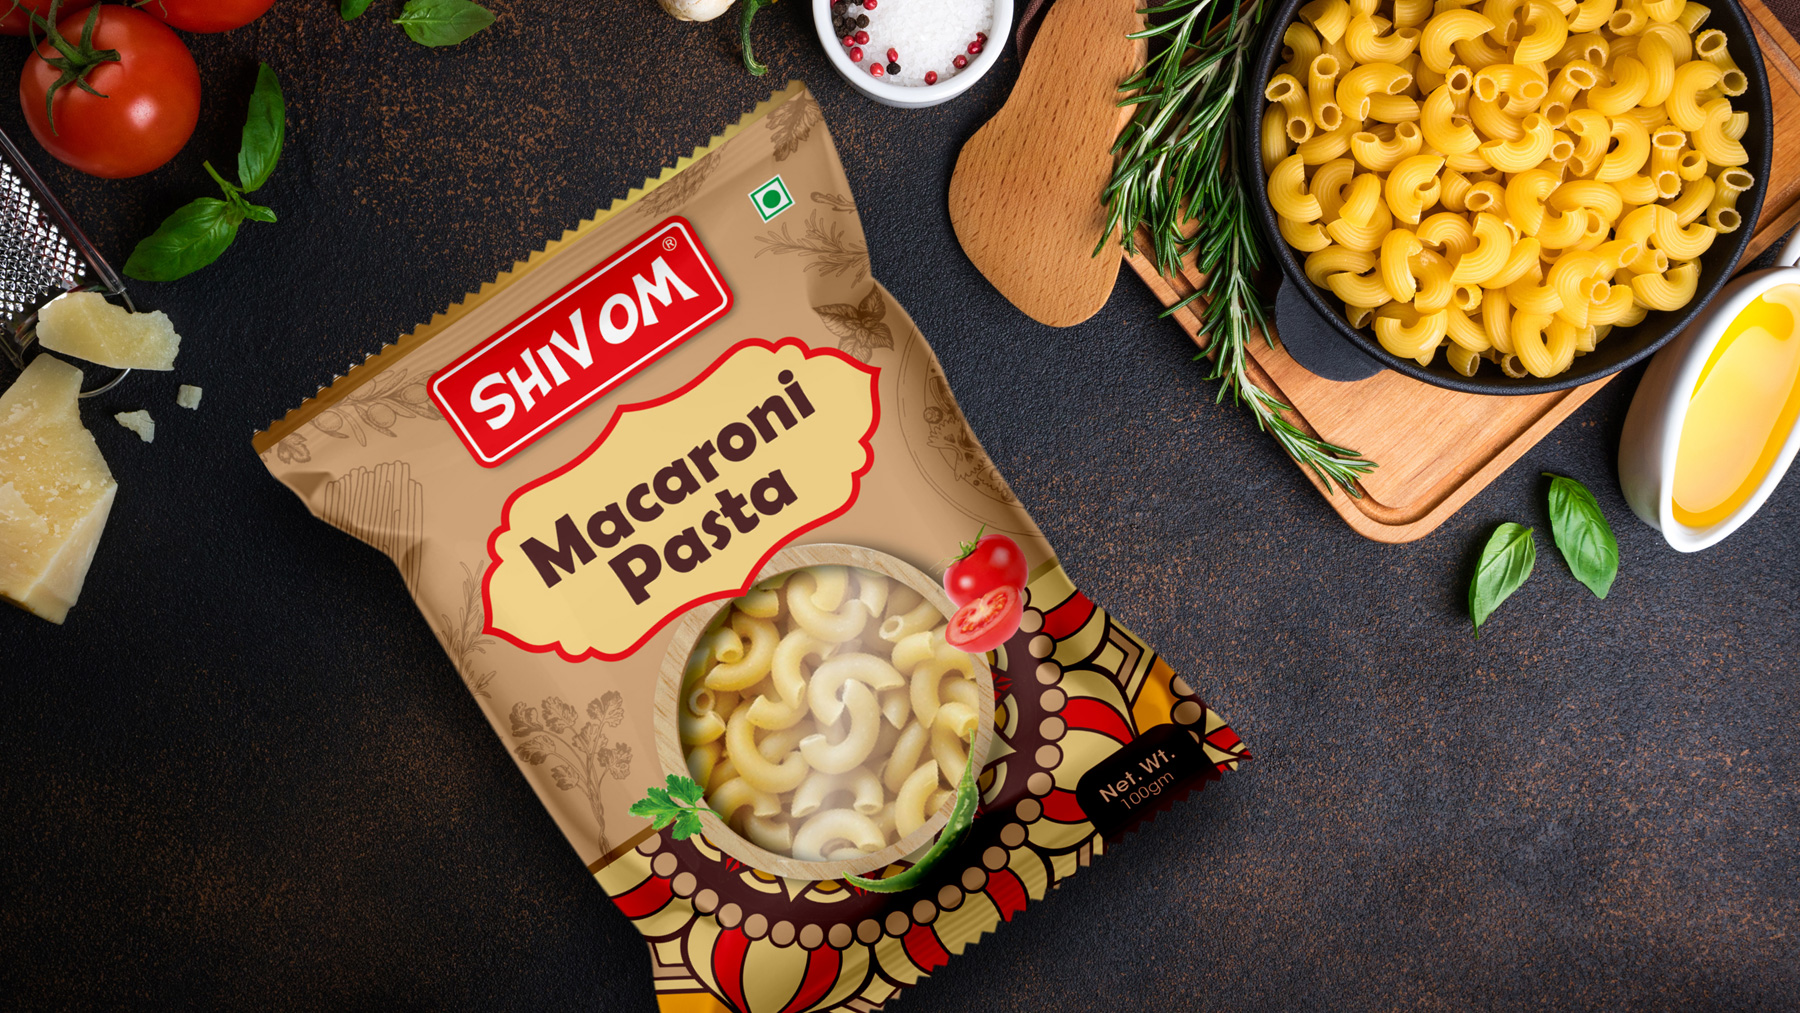 shivom macaroni fmcg branding